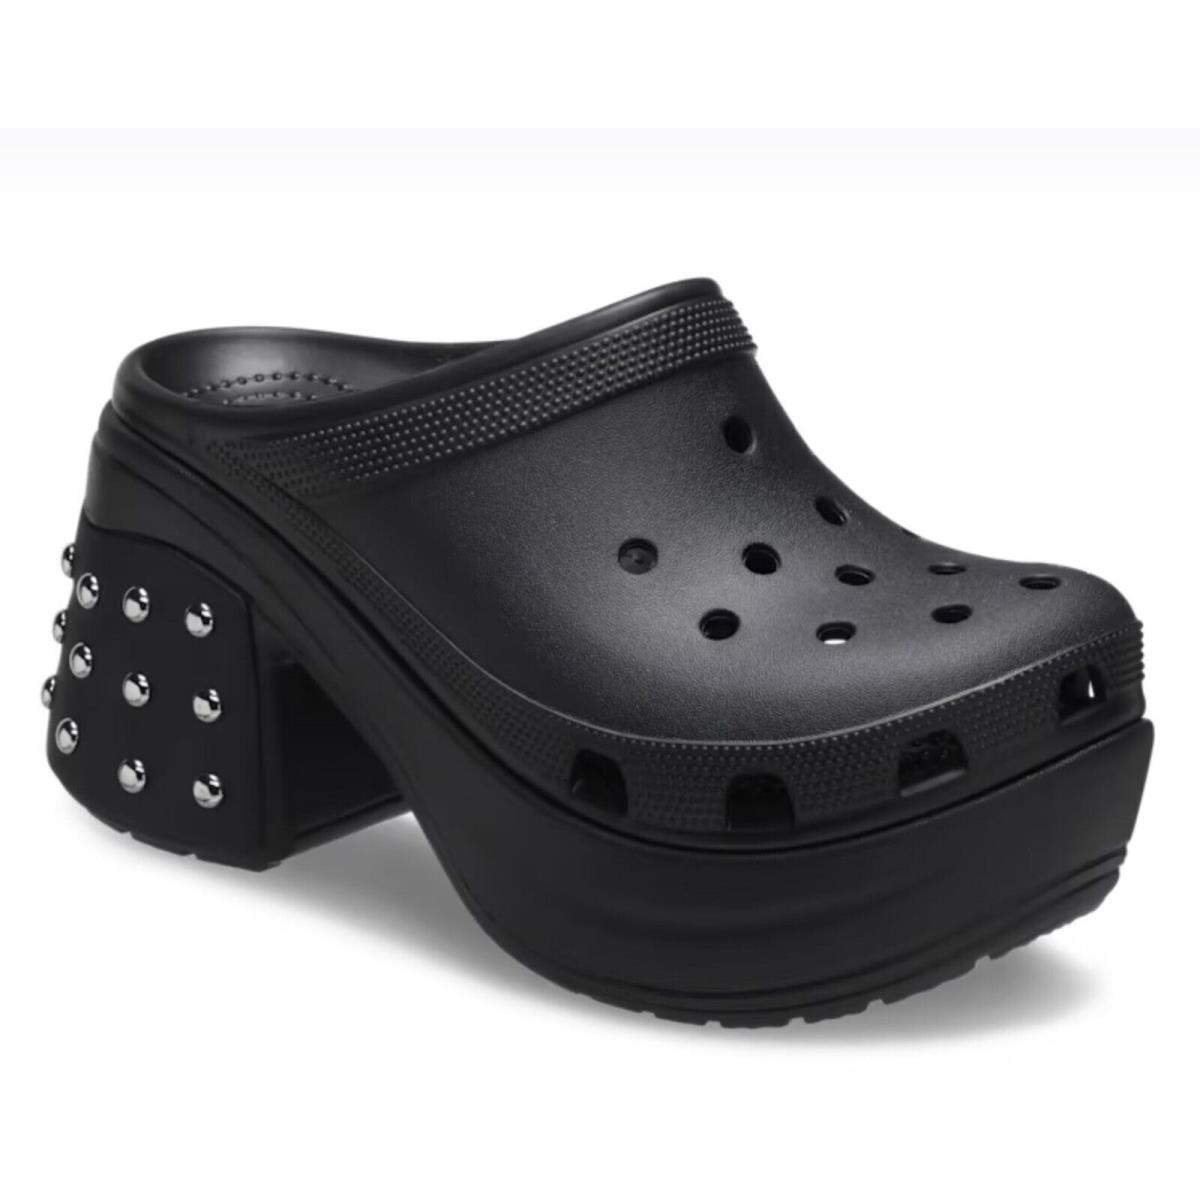 Crocs Siren Studded Heel Clog Black Women s Size 10 Tags - Black